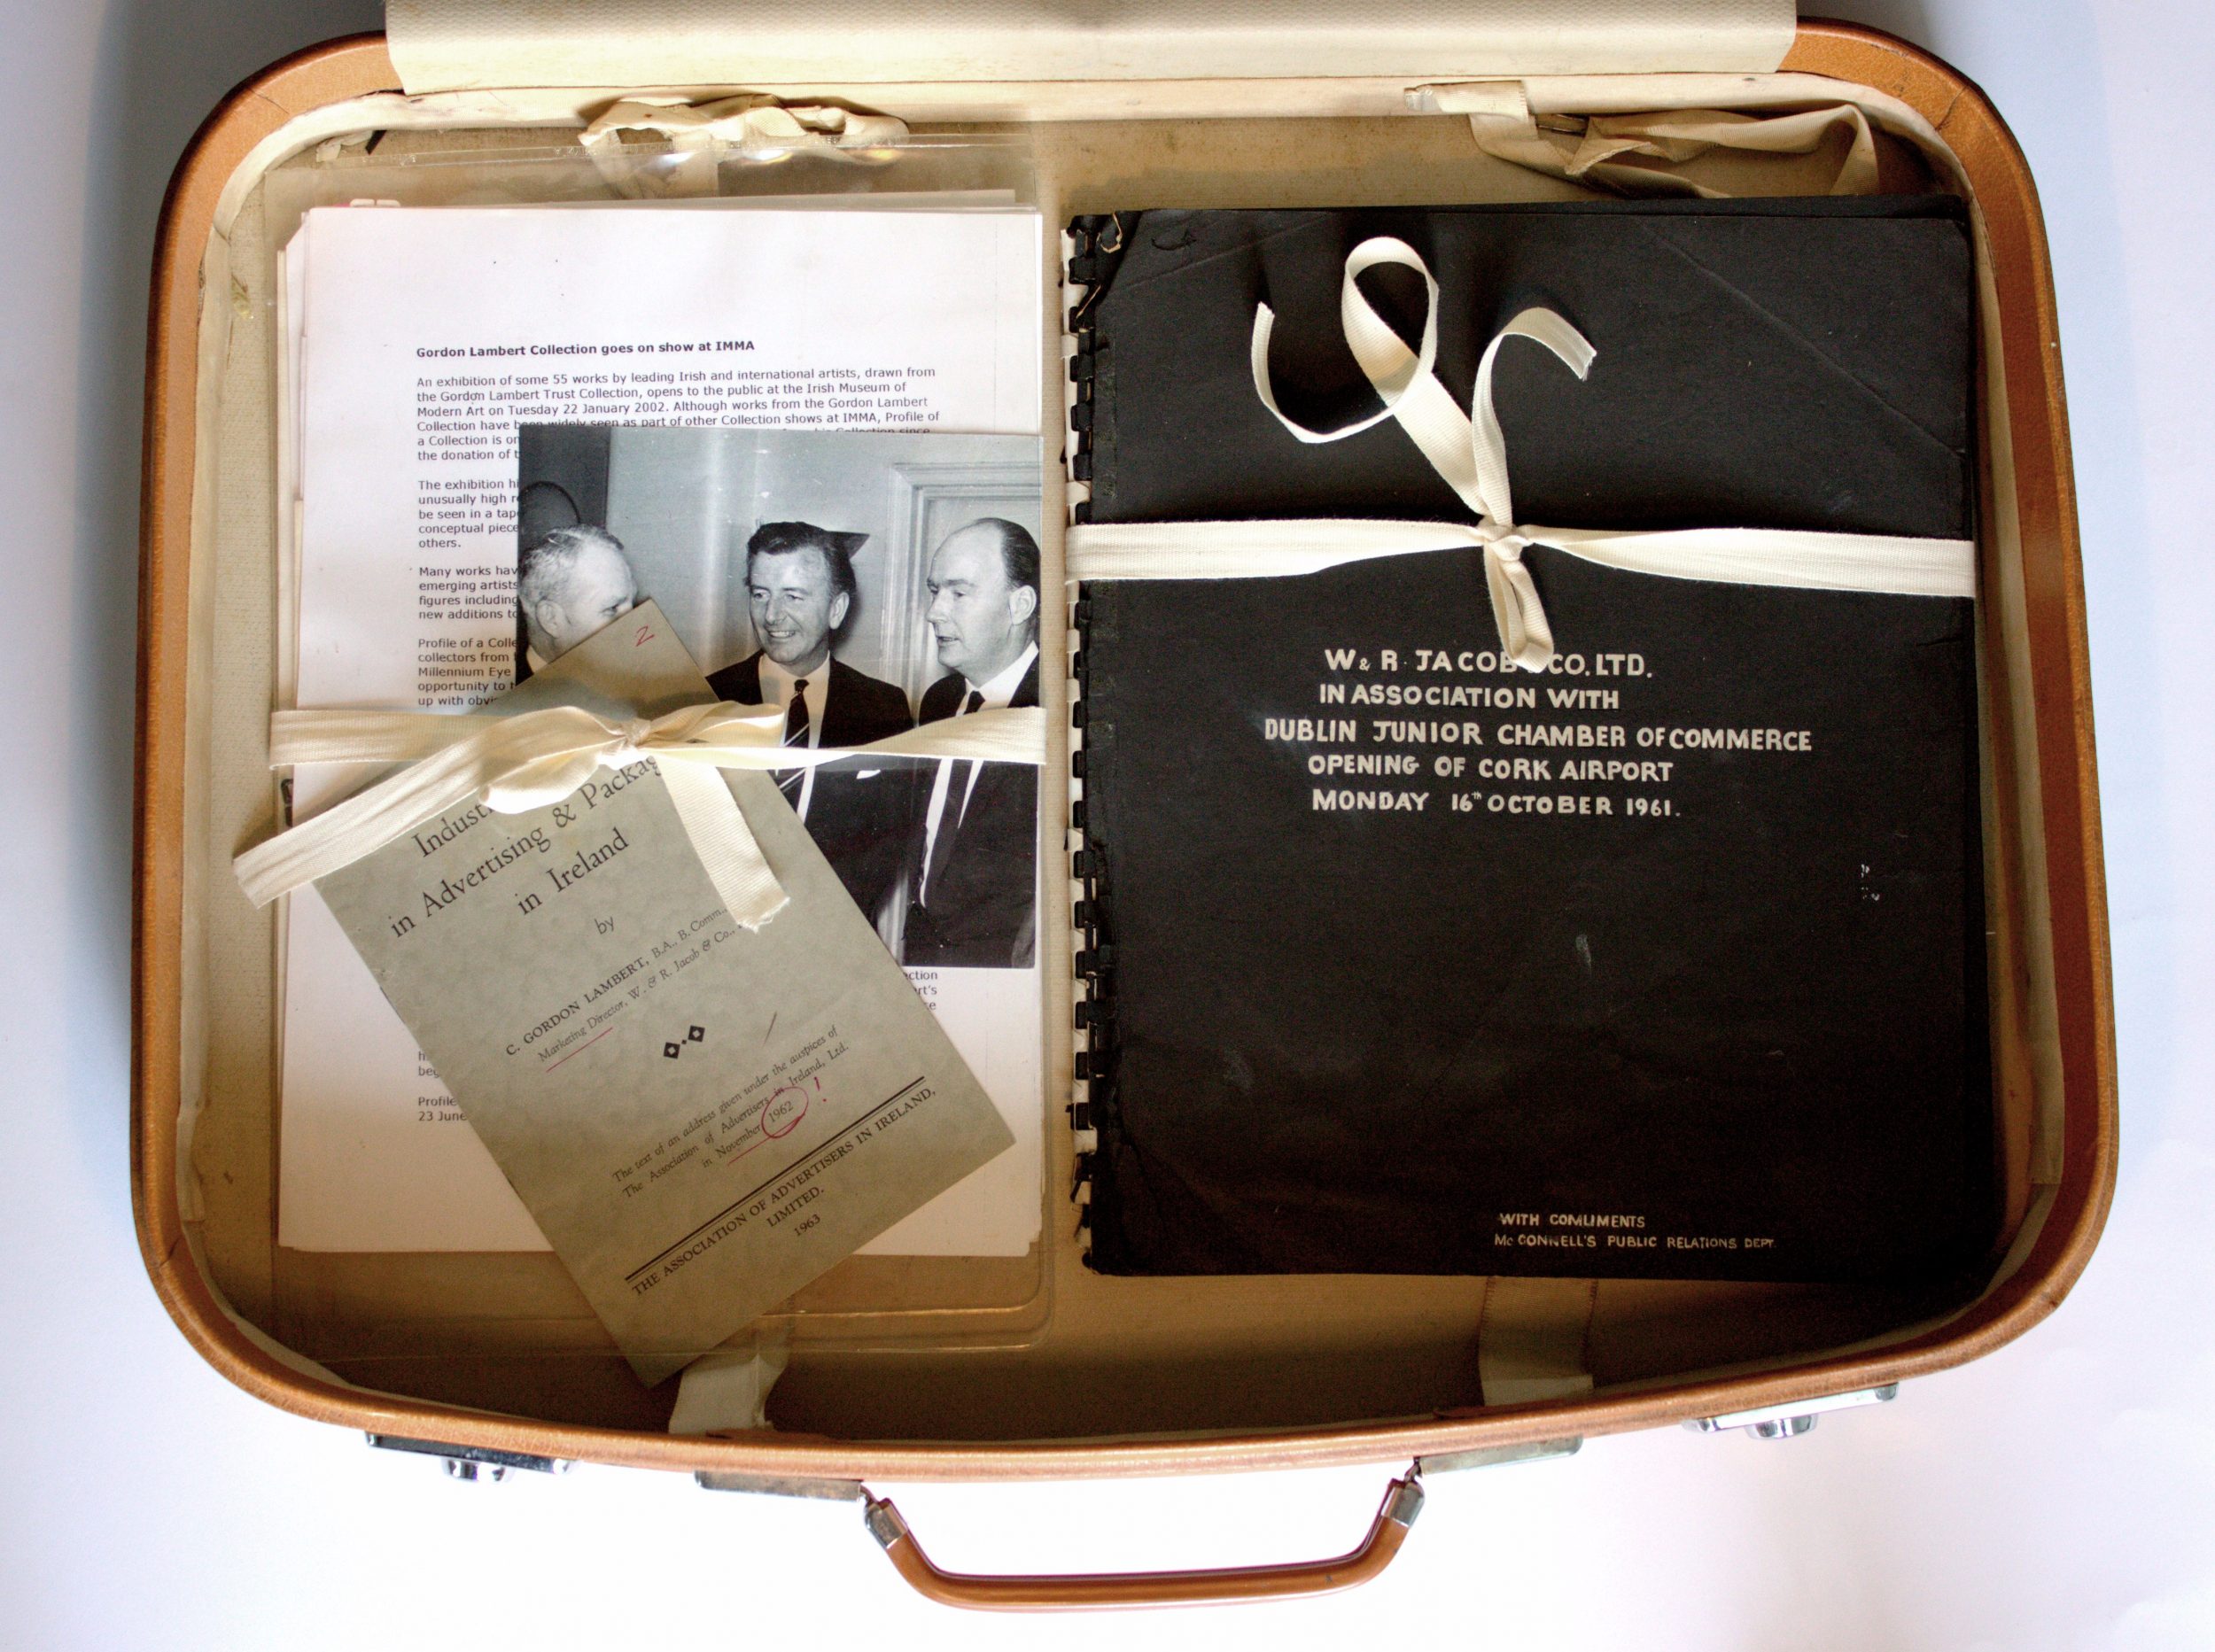 Gordon Lambert’s suitcase containing archive material, Photo: Chris Jones